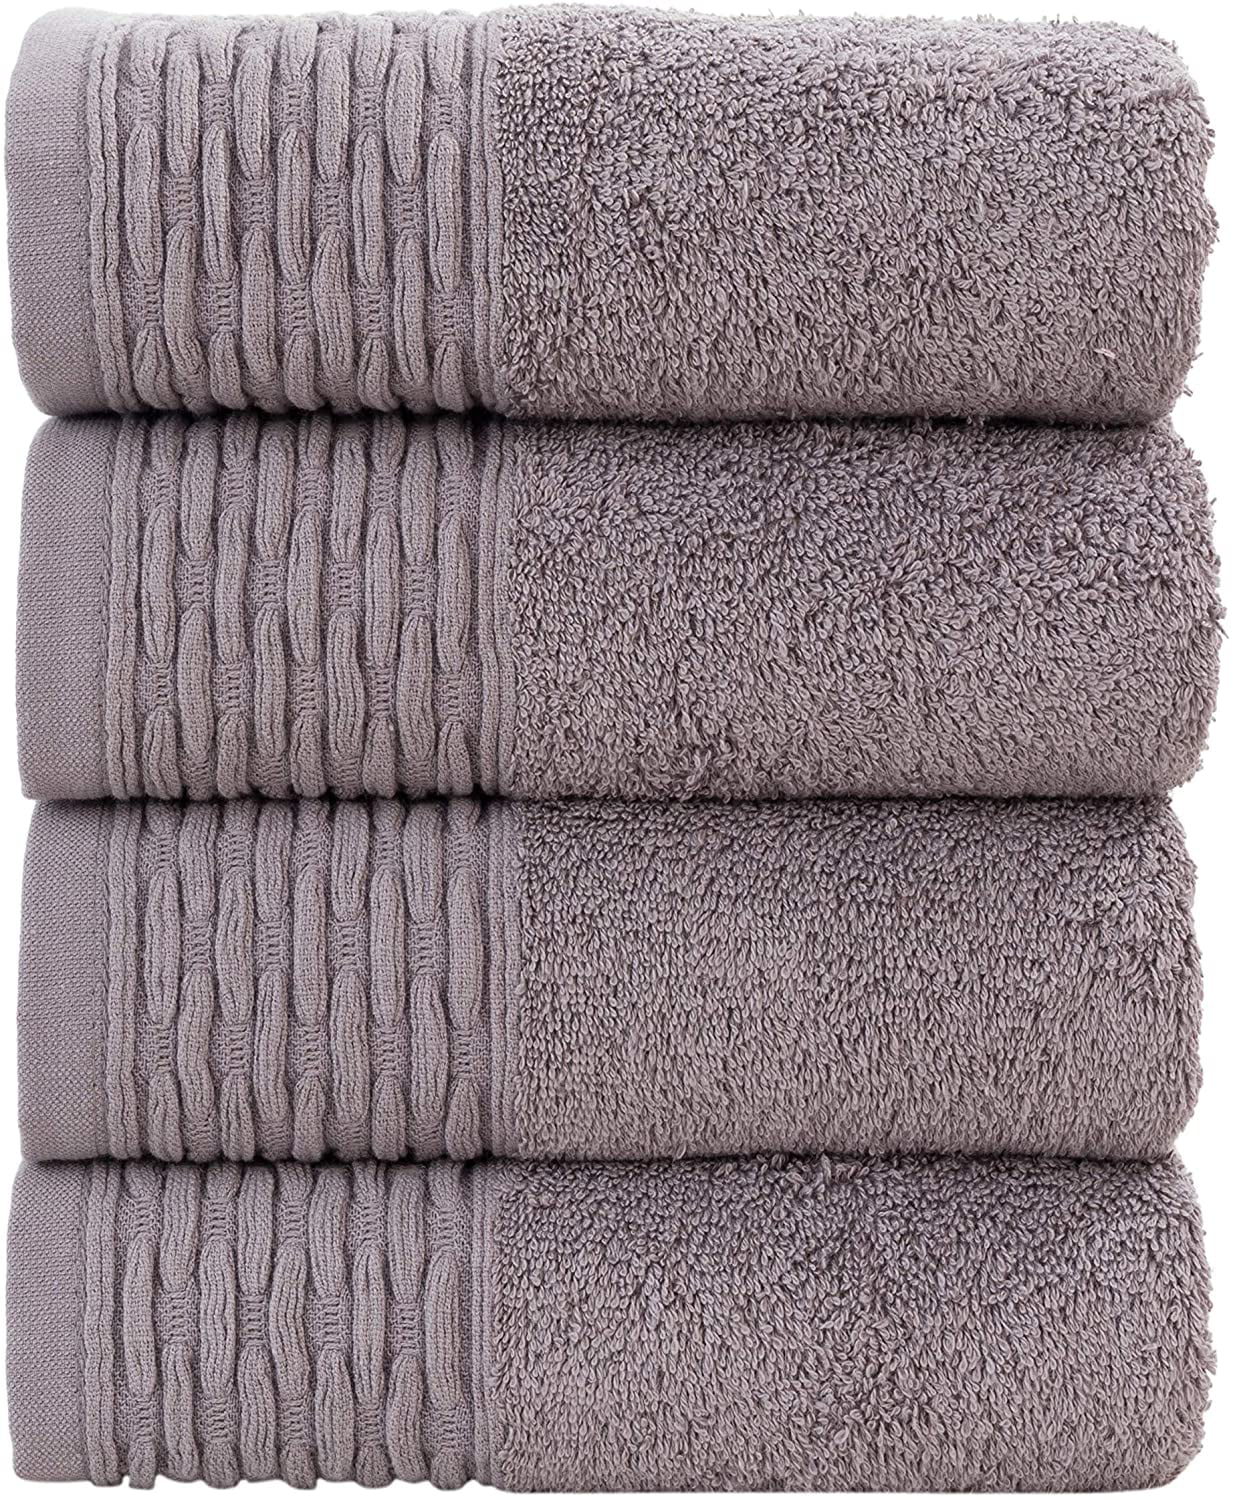 Ease-n-Comfort Towel Bale Set 100% Cotton Towel Set 10 Pieces Bath Towels Hand Face Bathroom Towels Gift Set Super Soft Highly Absorbent Cloth Black 